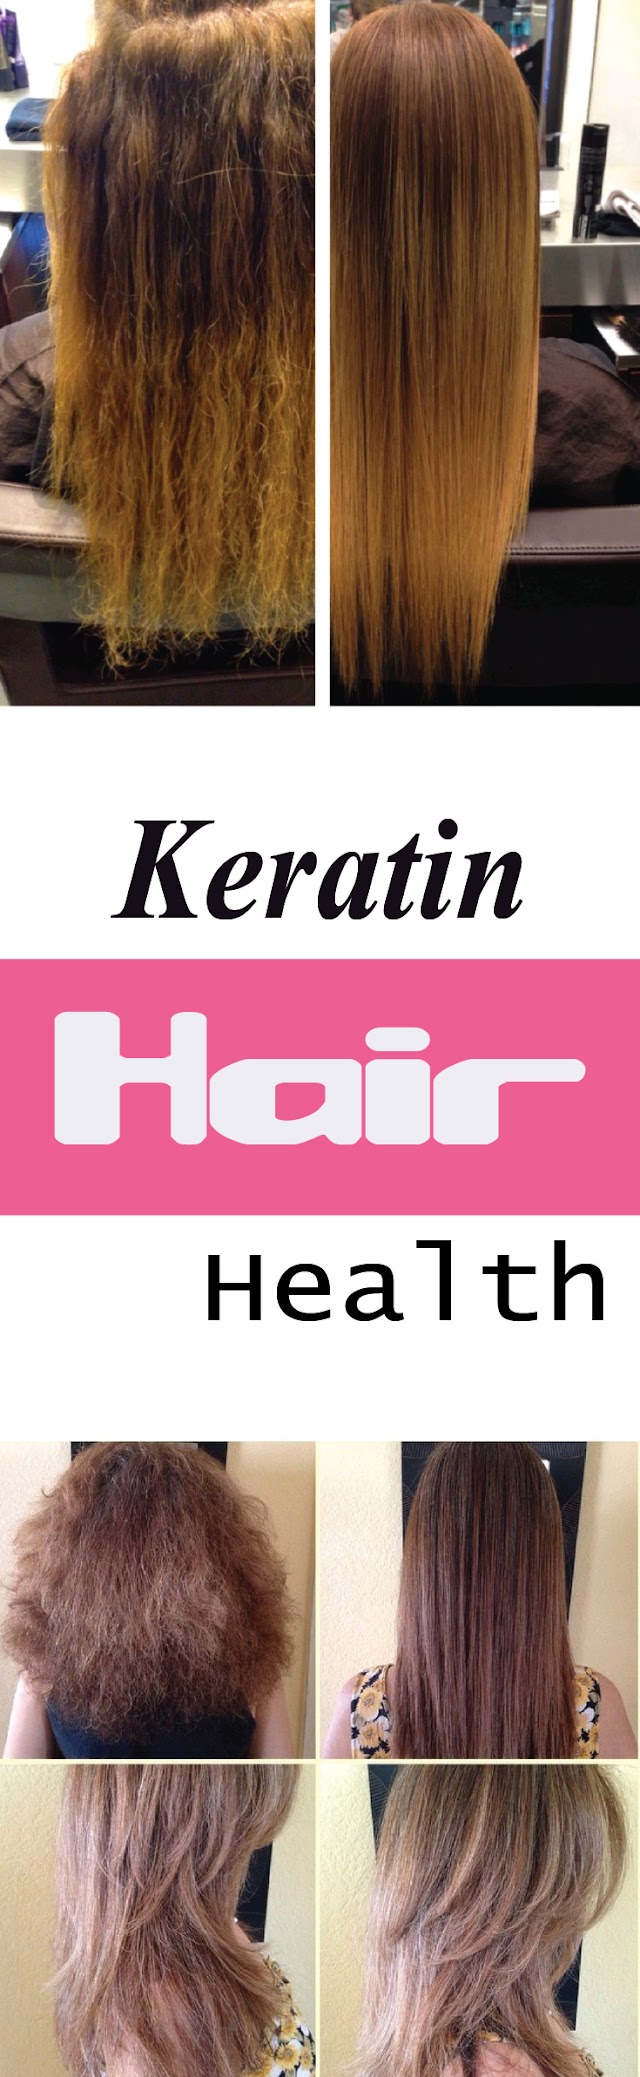 Keratin Hair health